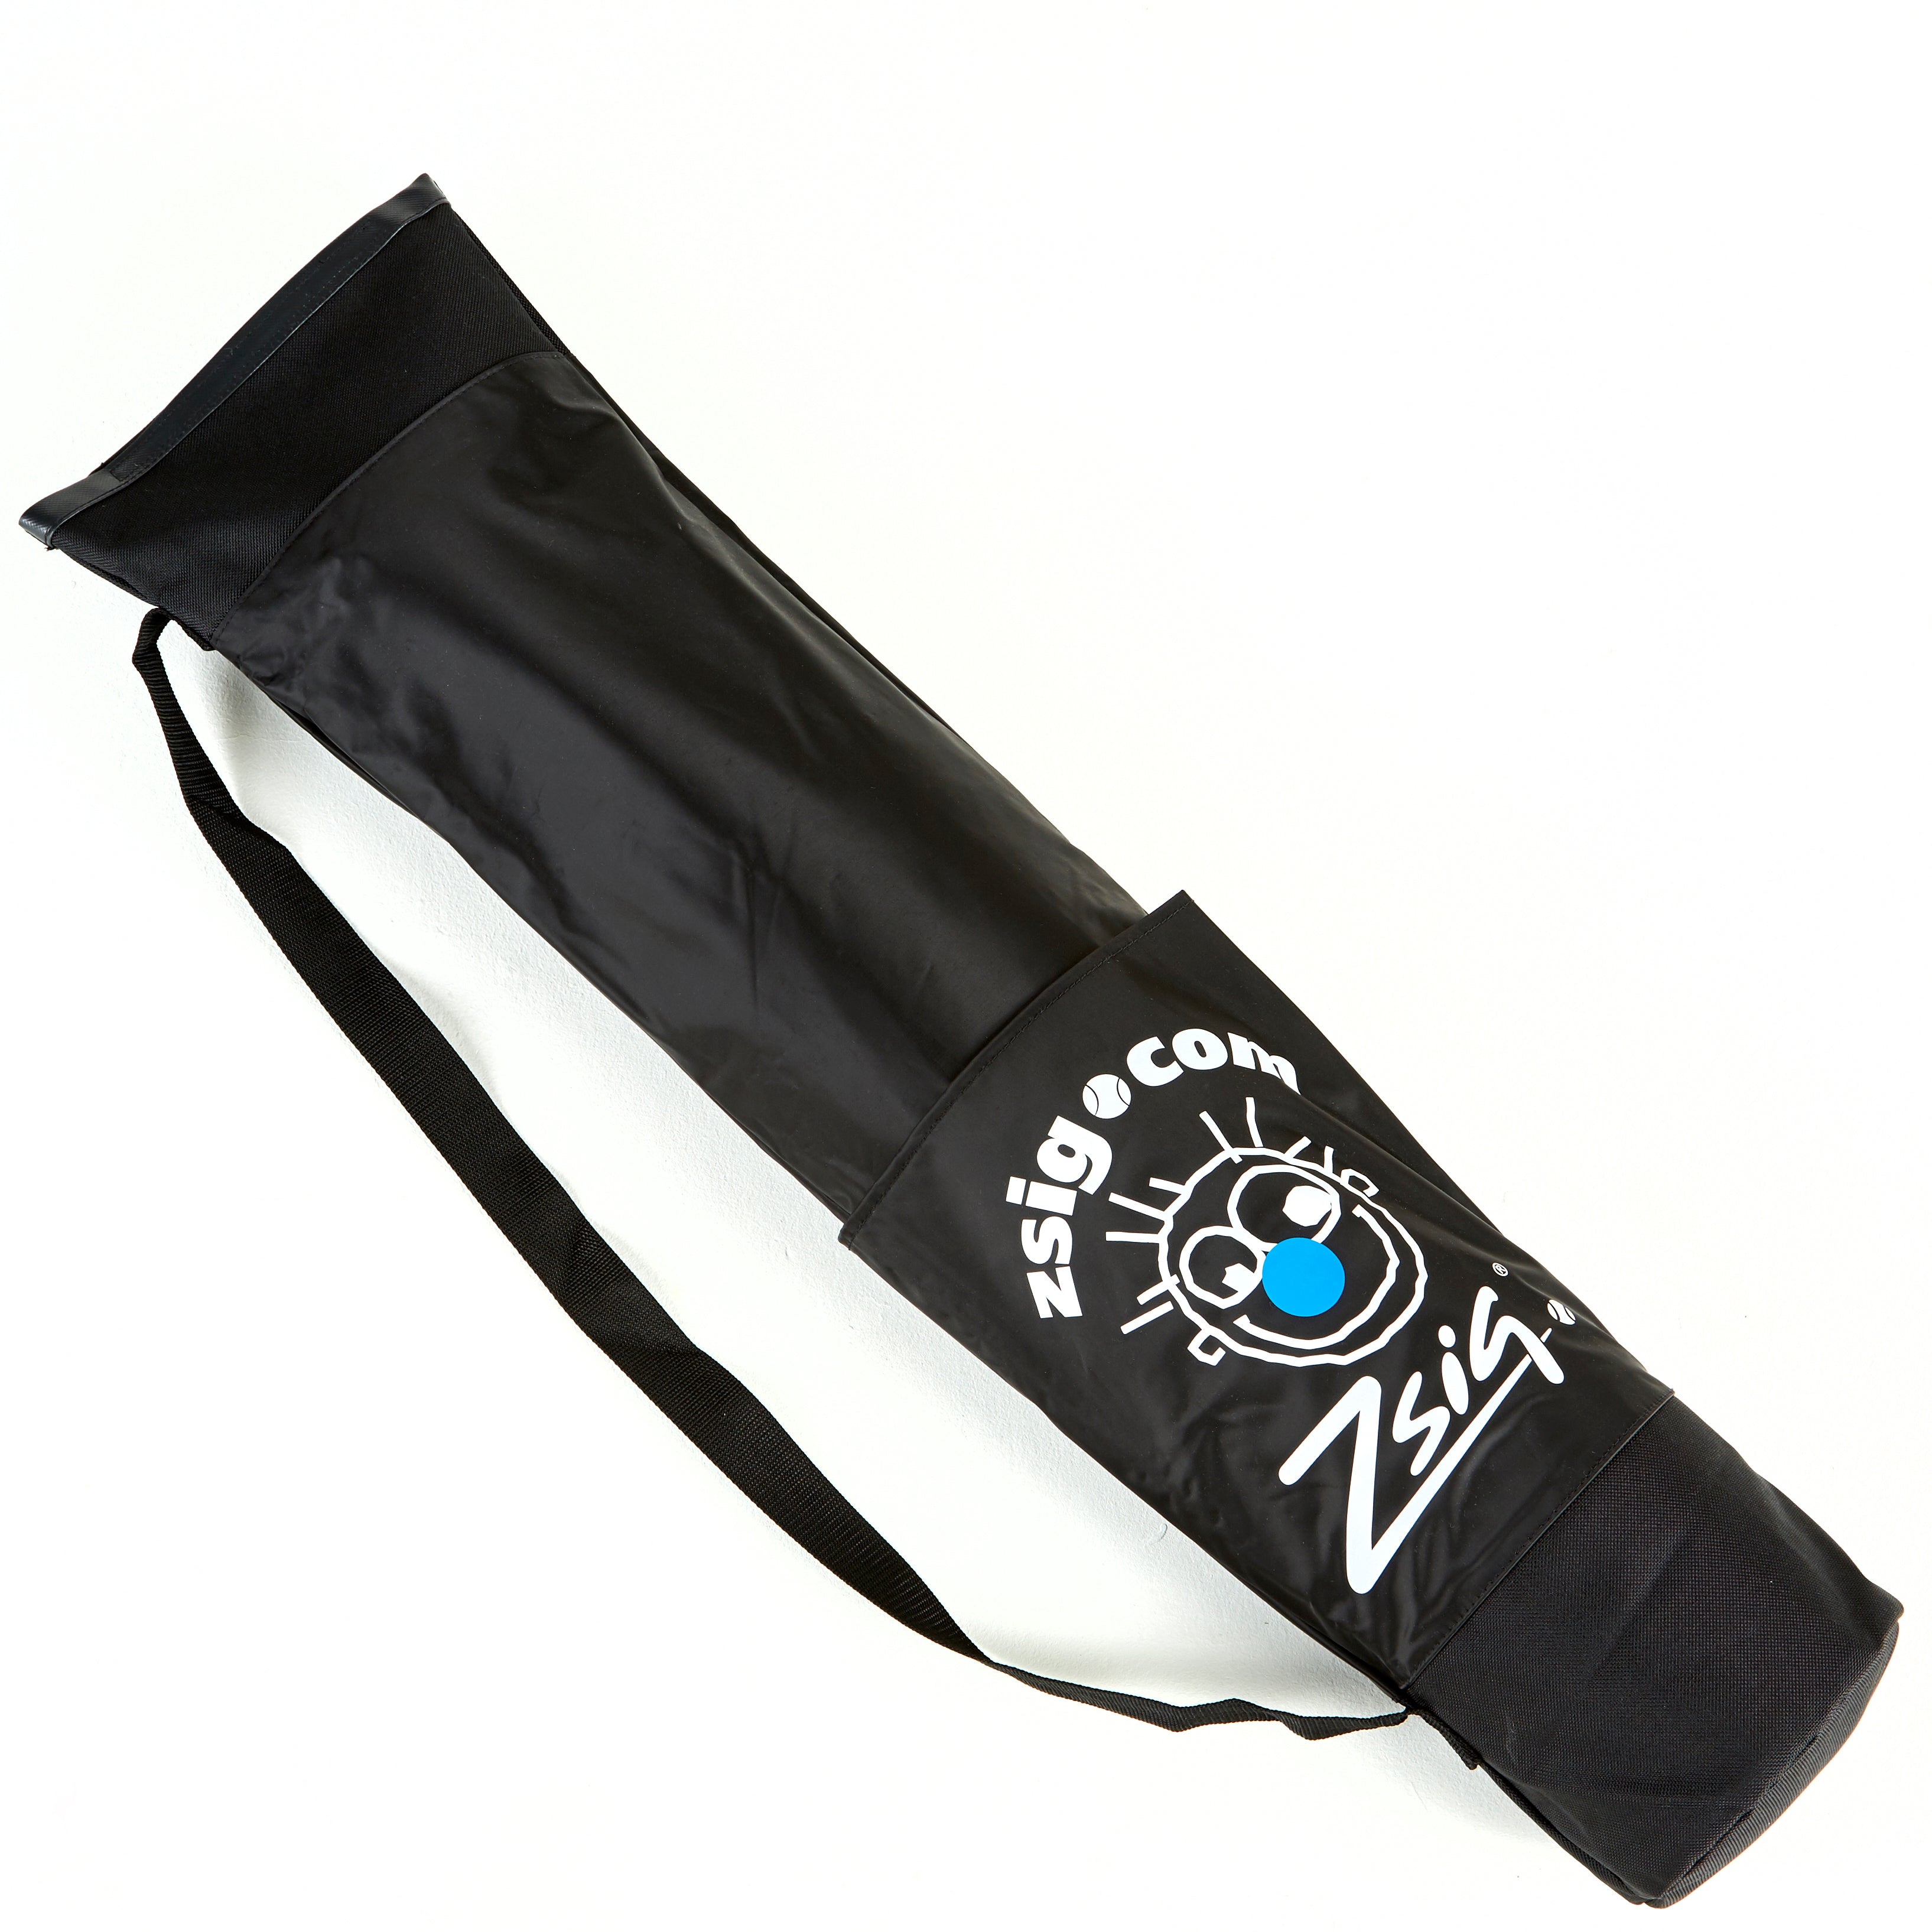 Zsig's Classic 6m Badminton Net System shoulder bag showing the net carry pocket